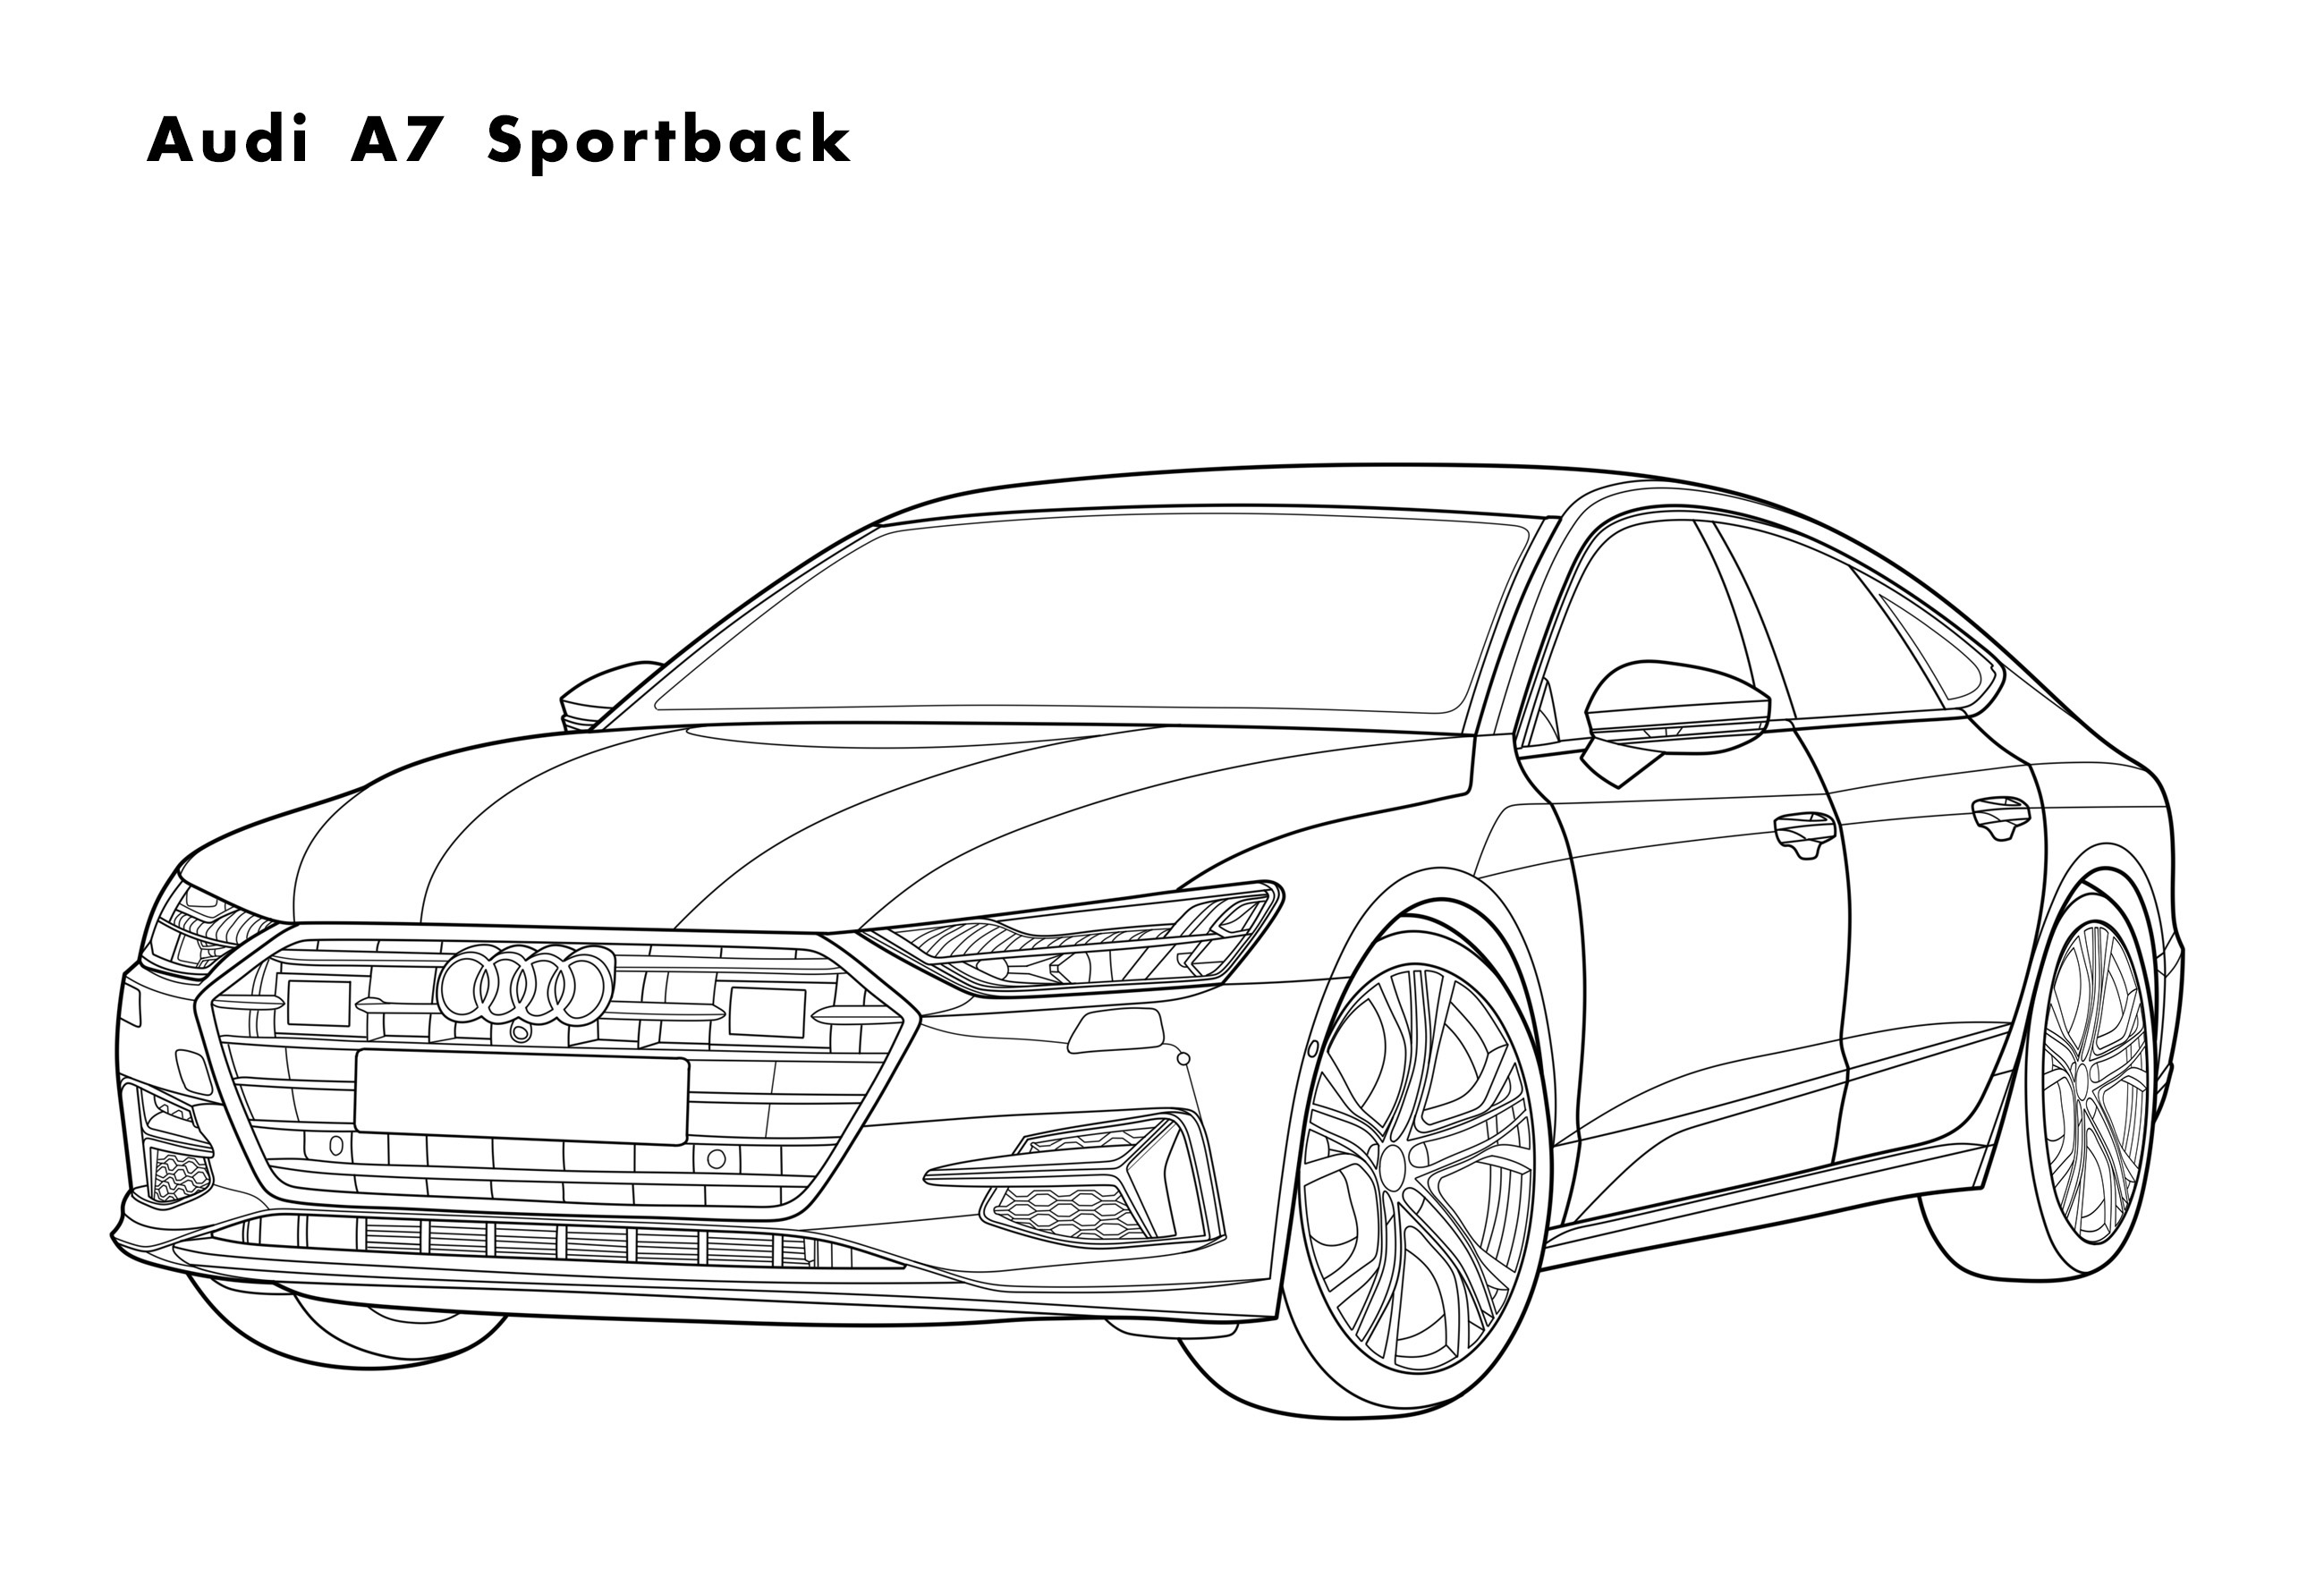  Audi A7   Illustratorsru